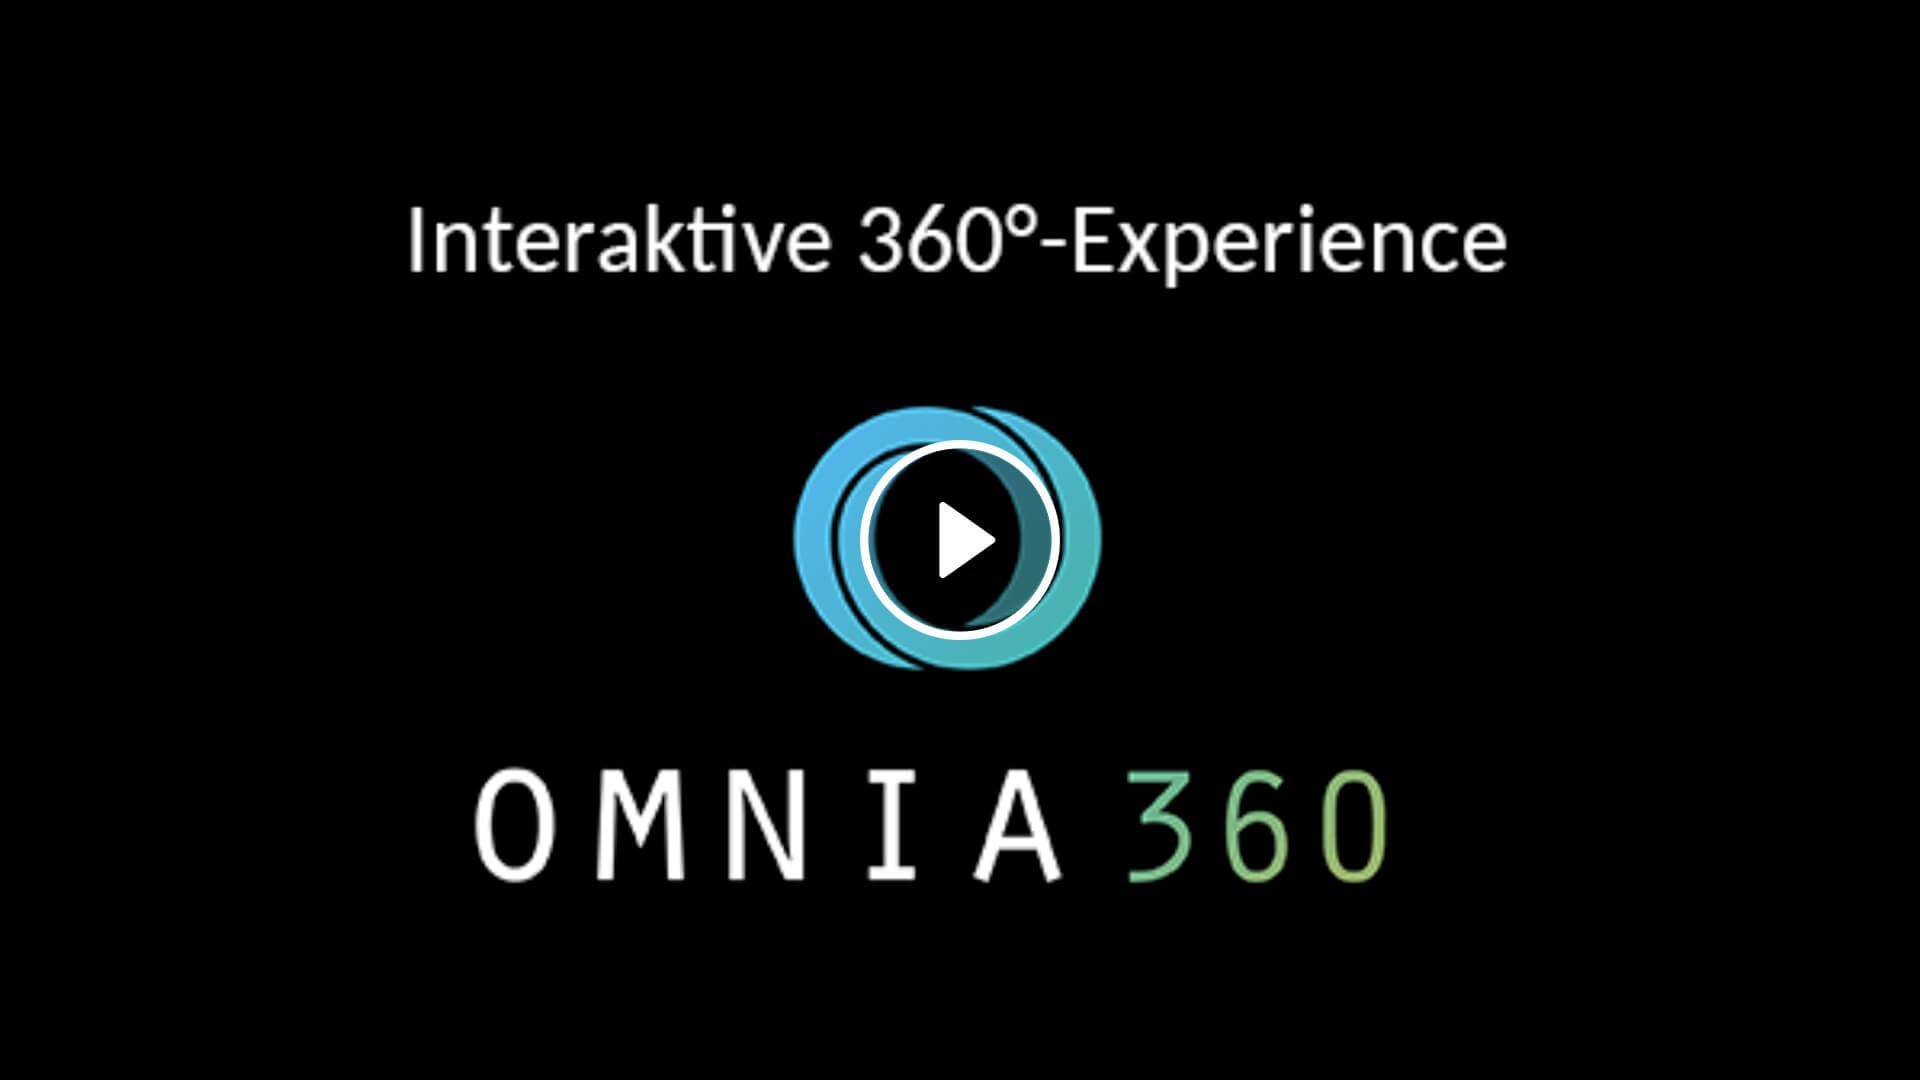 Omnia360